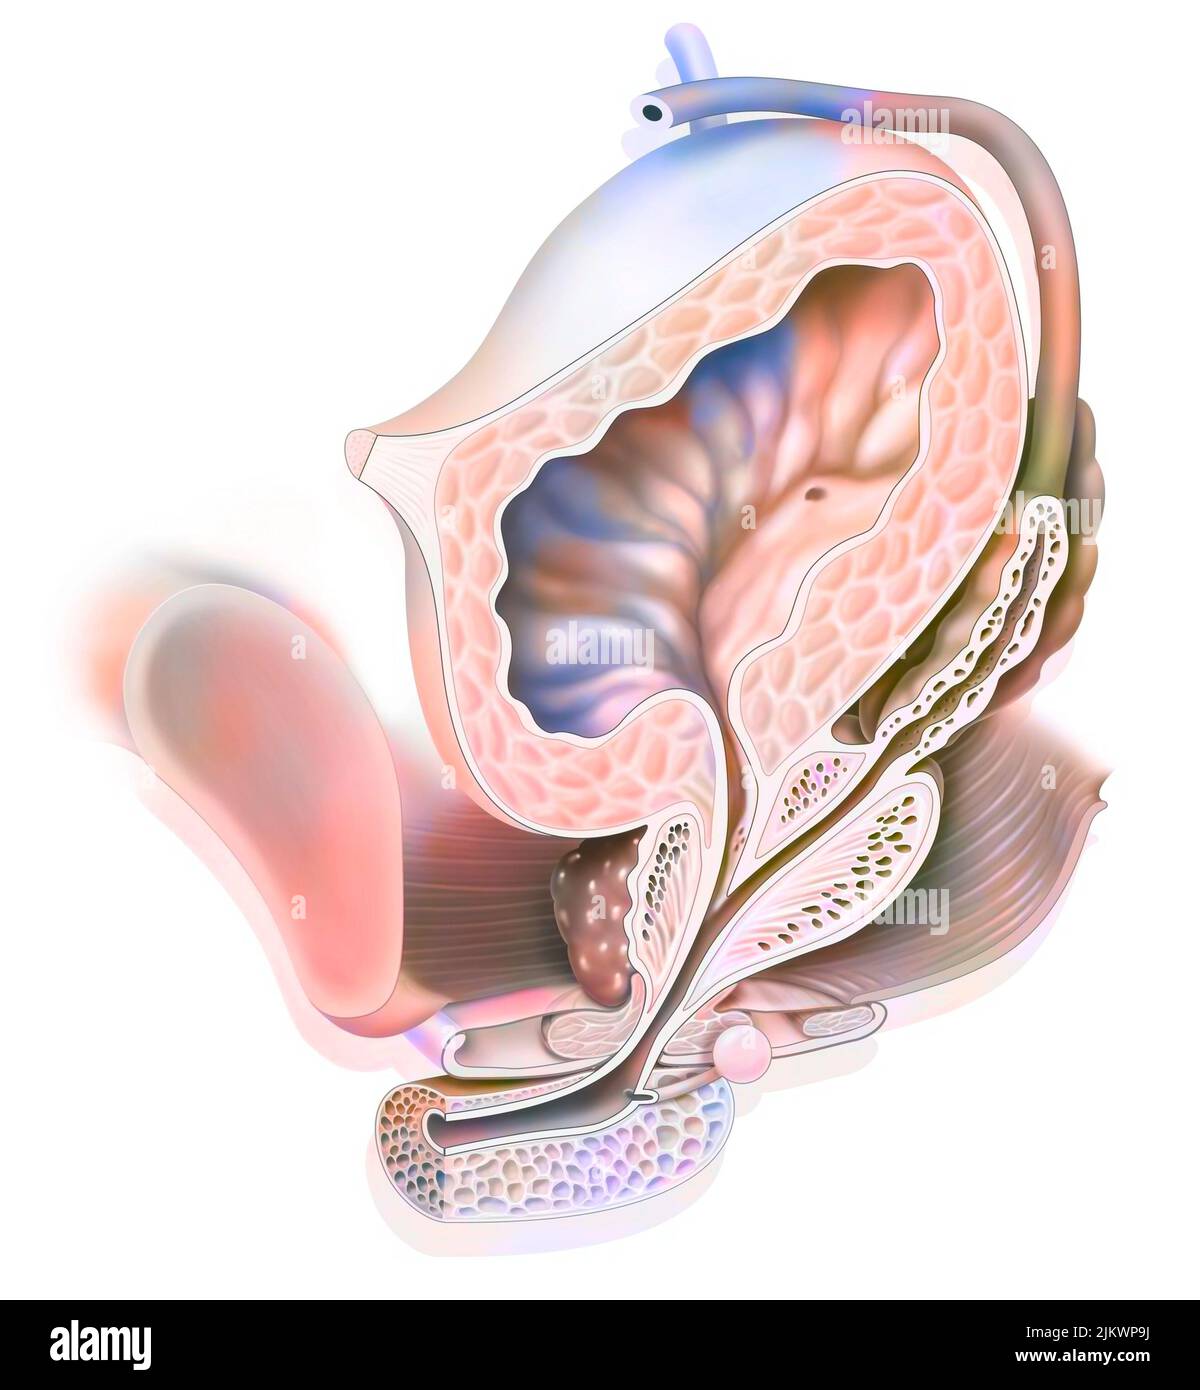 Anatomy of male urogenital system with ureter, bladder. Stock Photo